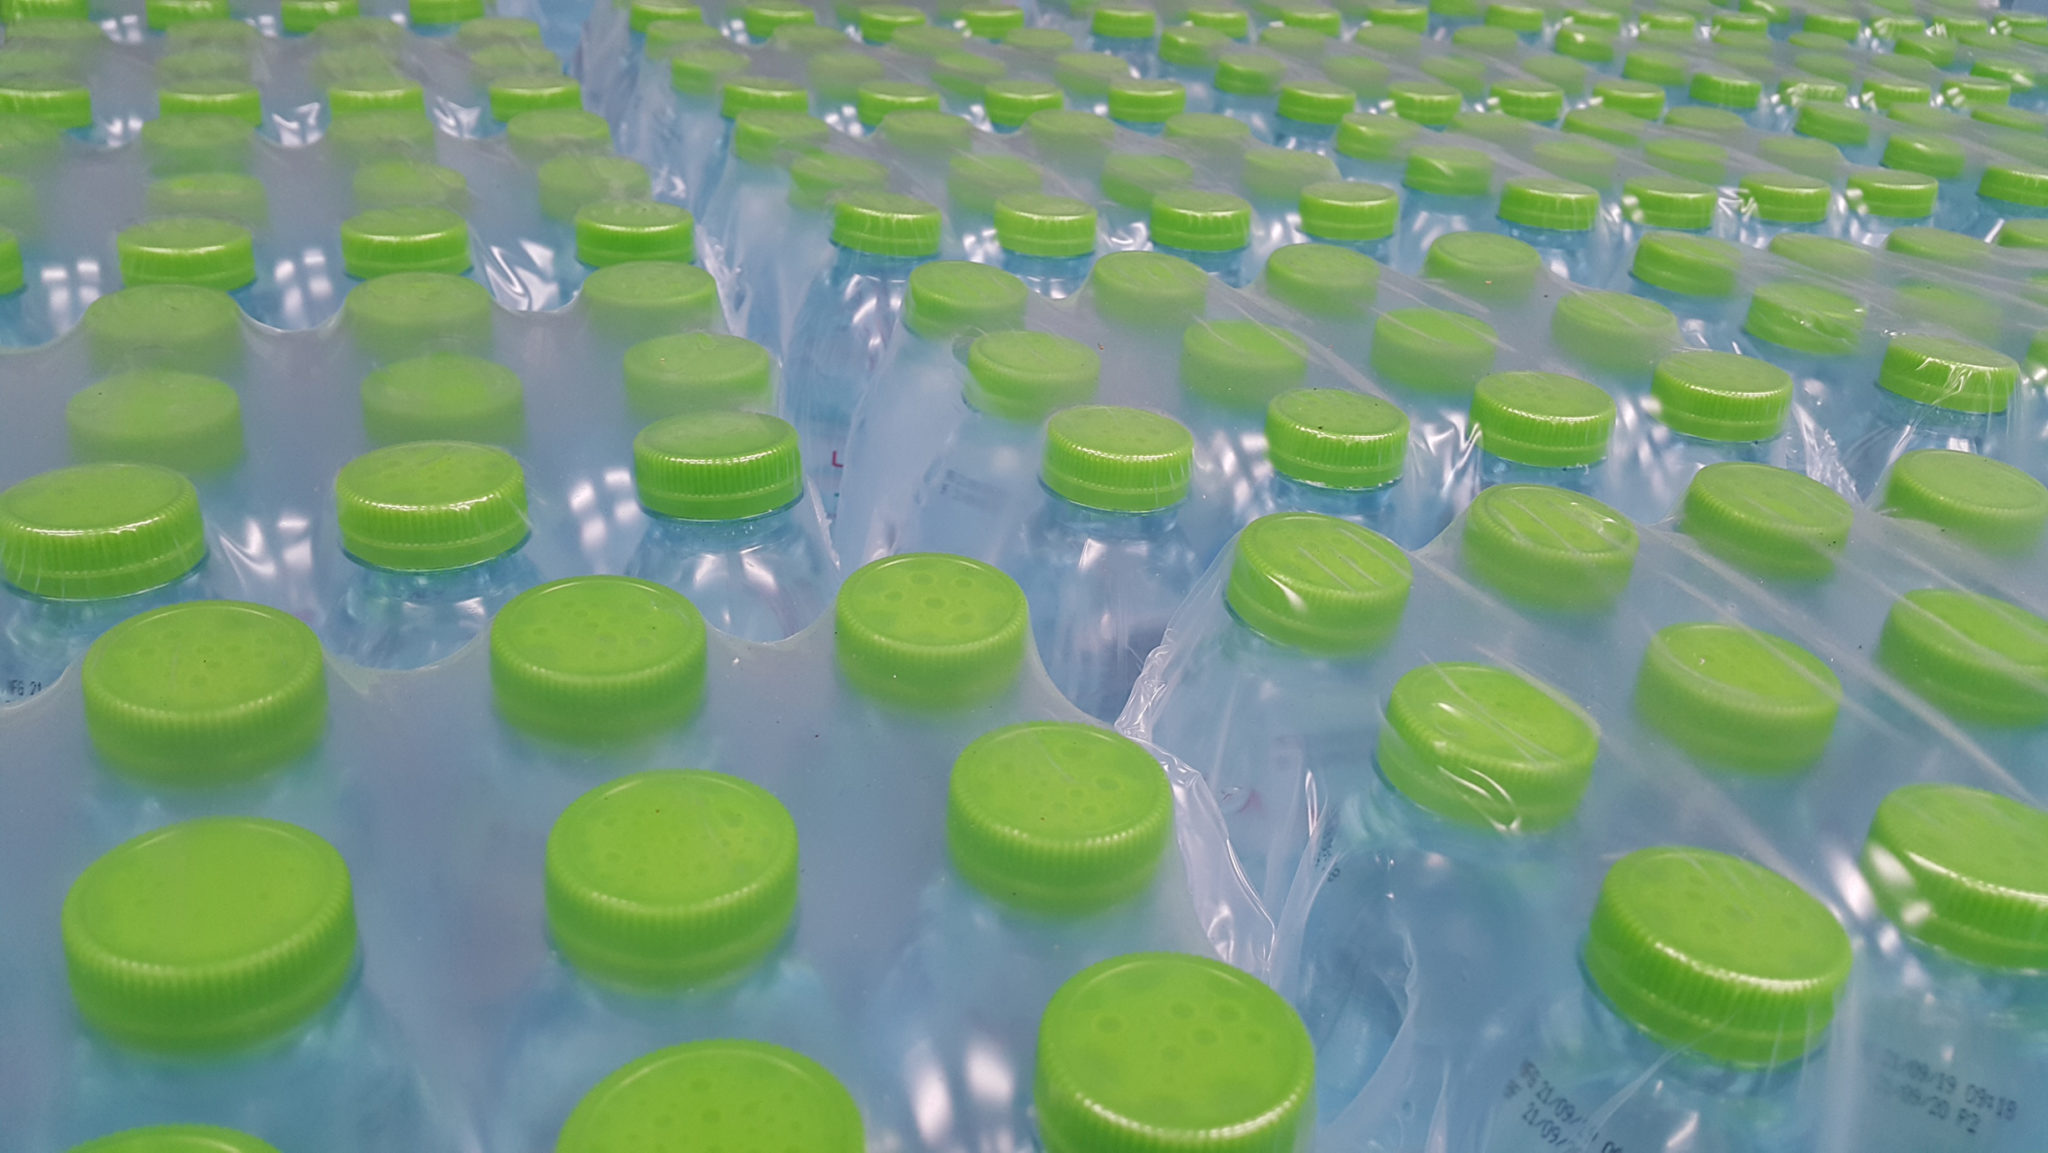 water bottles in shrink bundling film